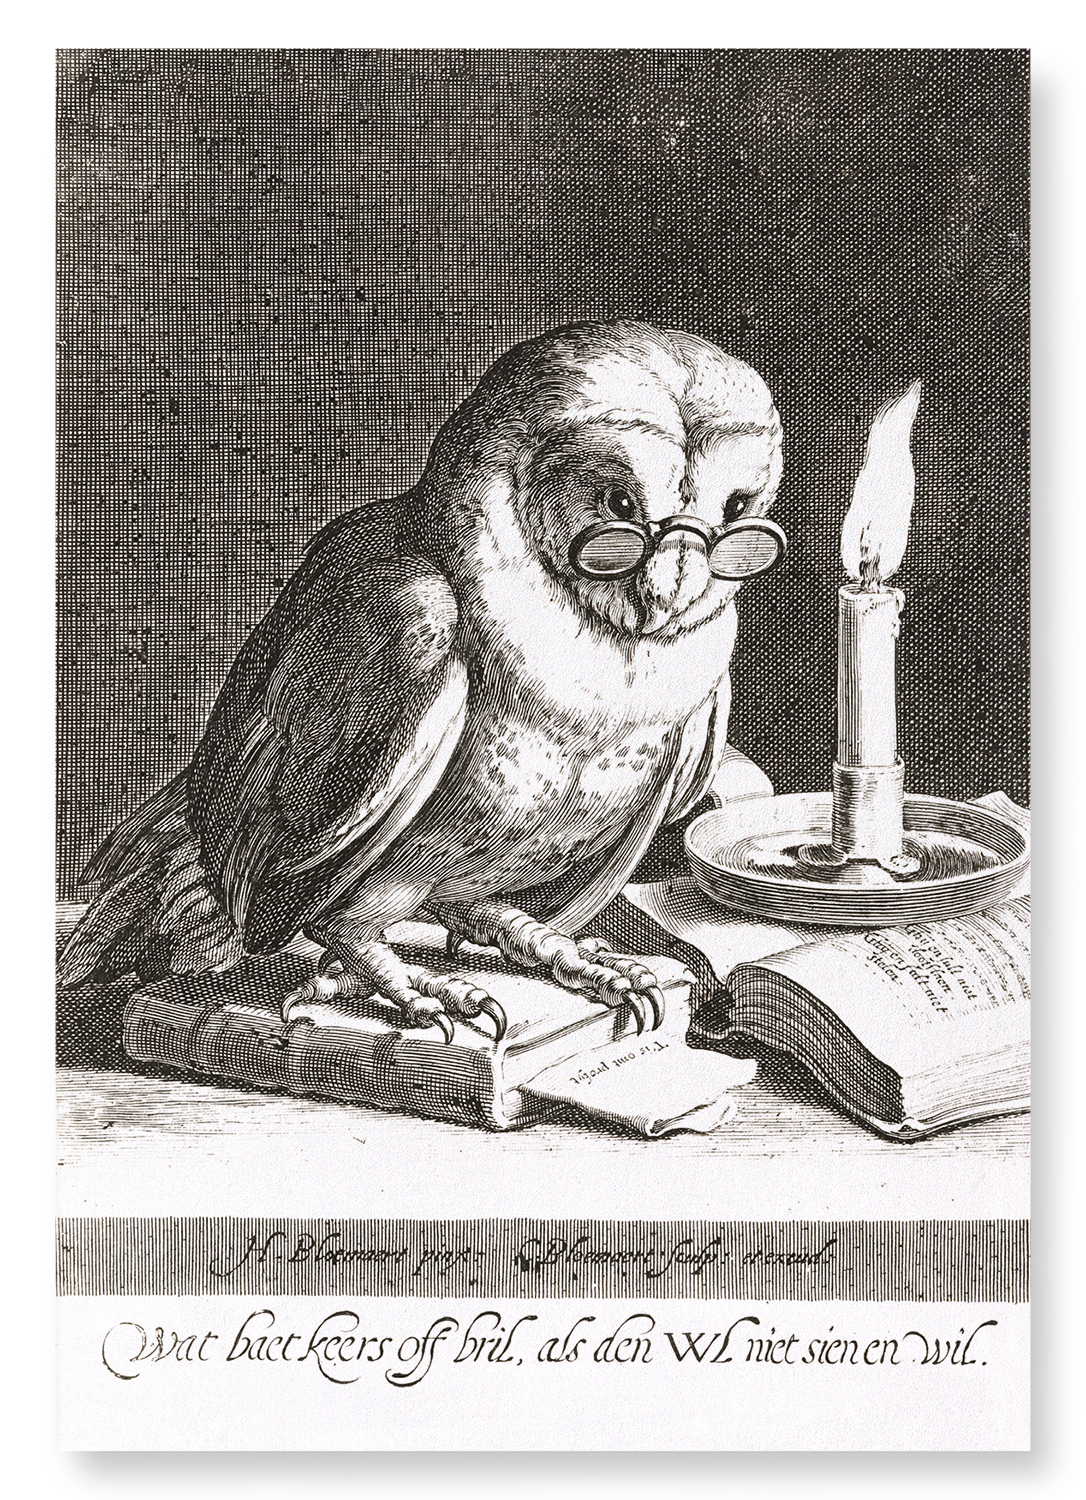 WISE OWL (1625): Painting Art Print